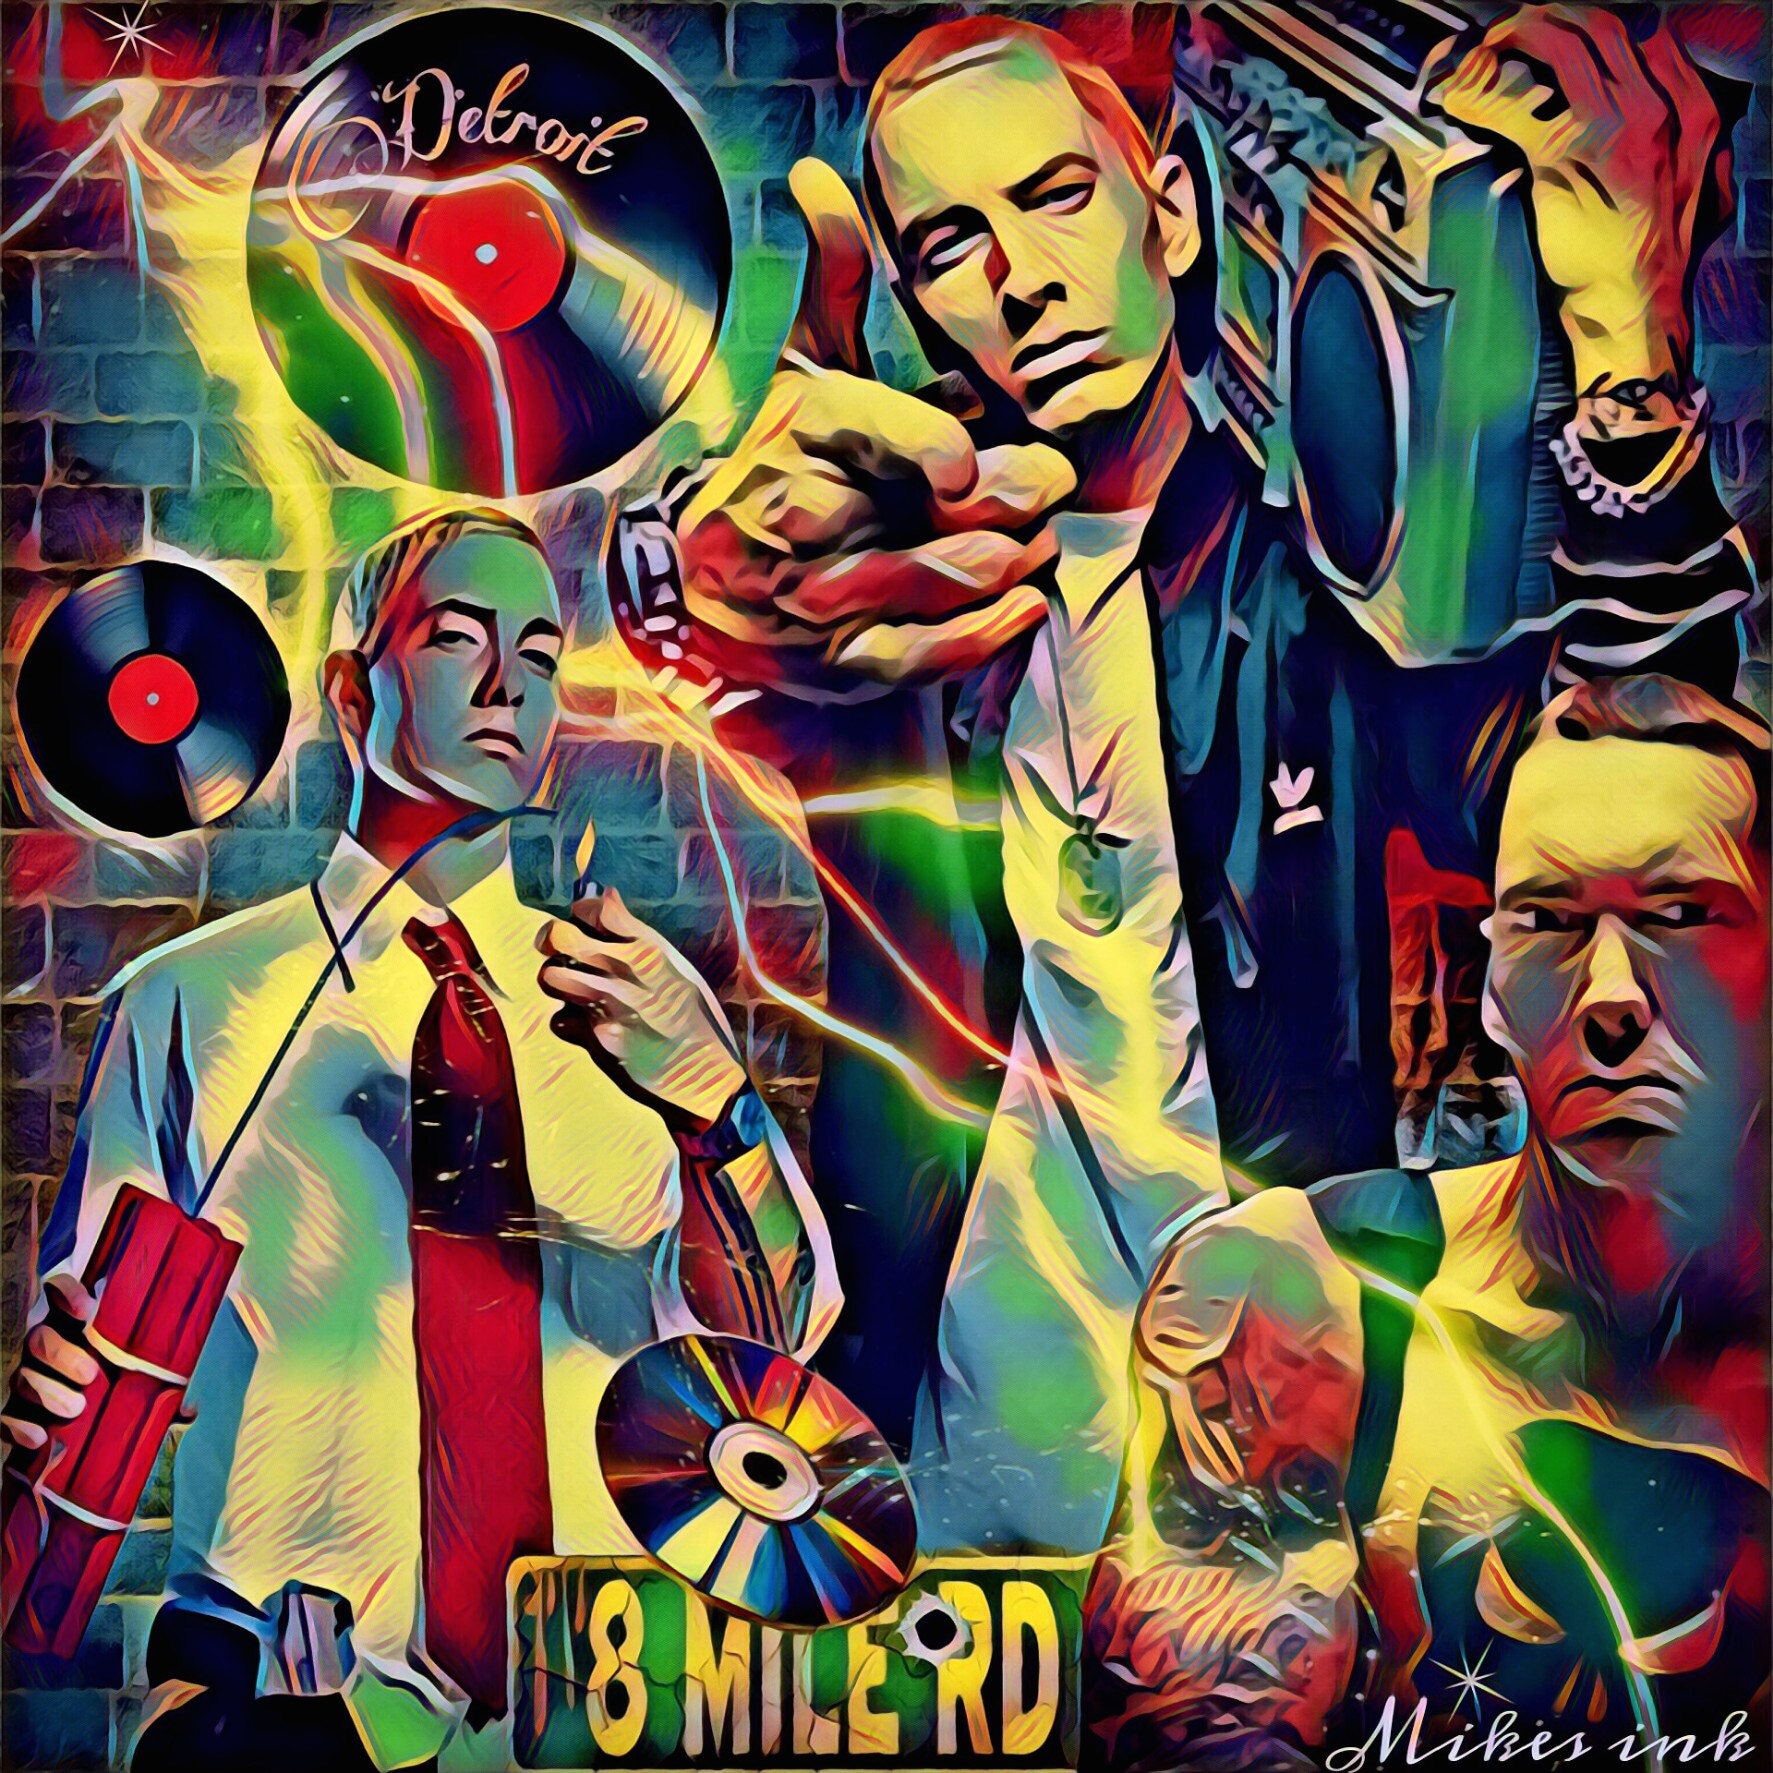 Eminem Canvas Pictures Slim Shady Rap Artist Hip Hop Large Art Photo Poster